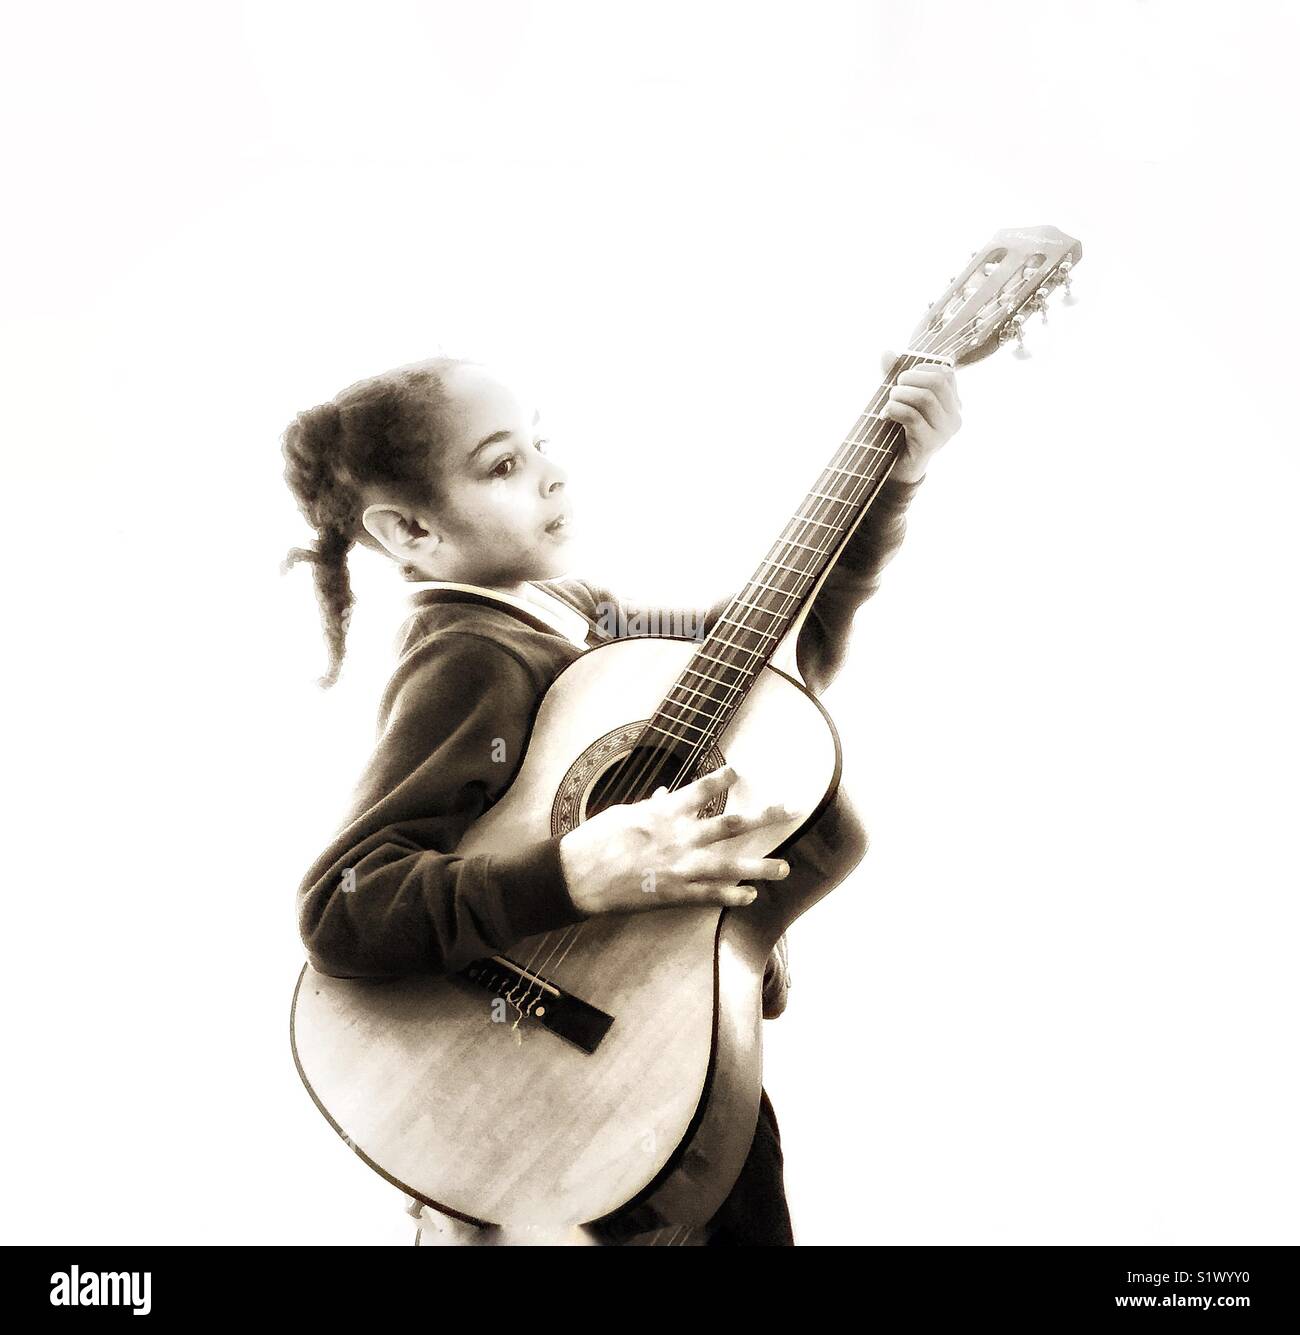 A girl strums a guitar. Stock Photo